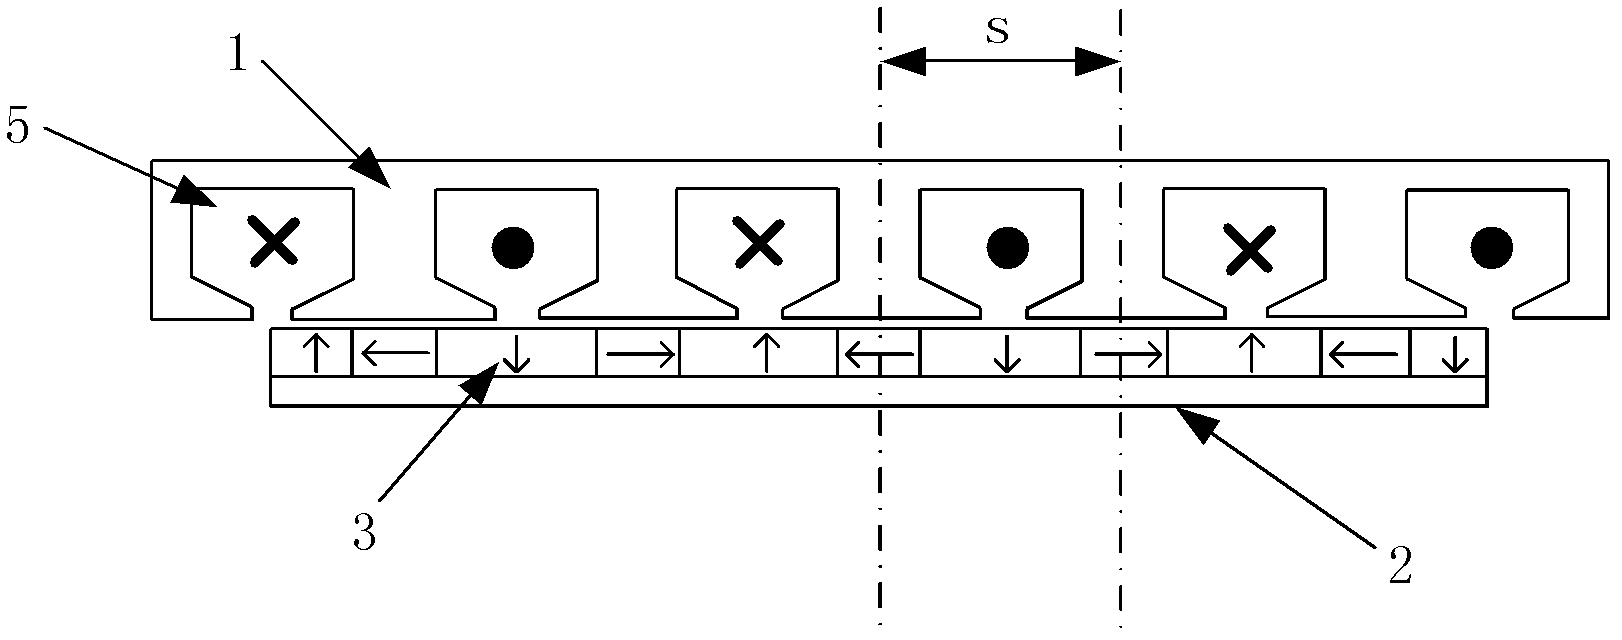 Linear oscillation motor for direct drive pump based on selfshield characteristic of Halbach array